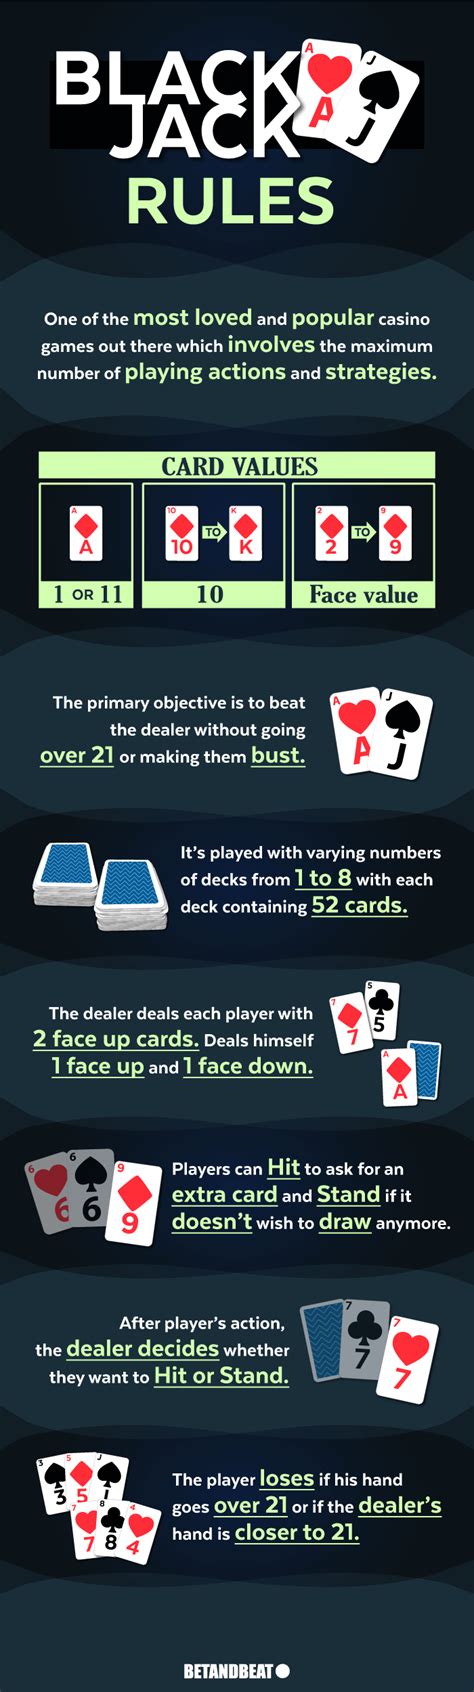 blackjack card games rules cdgh